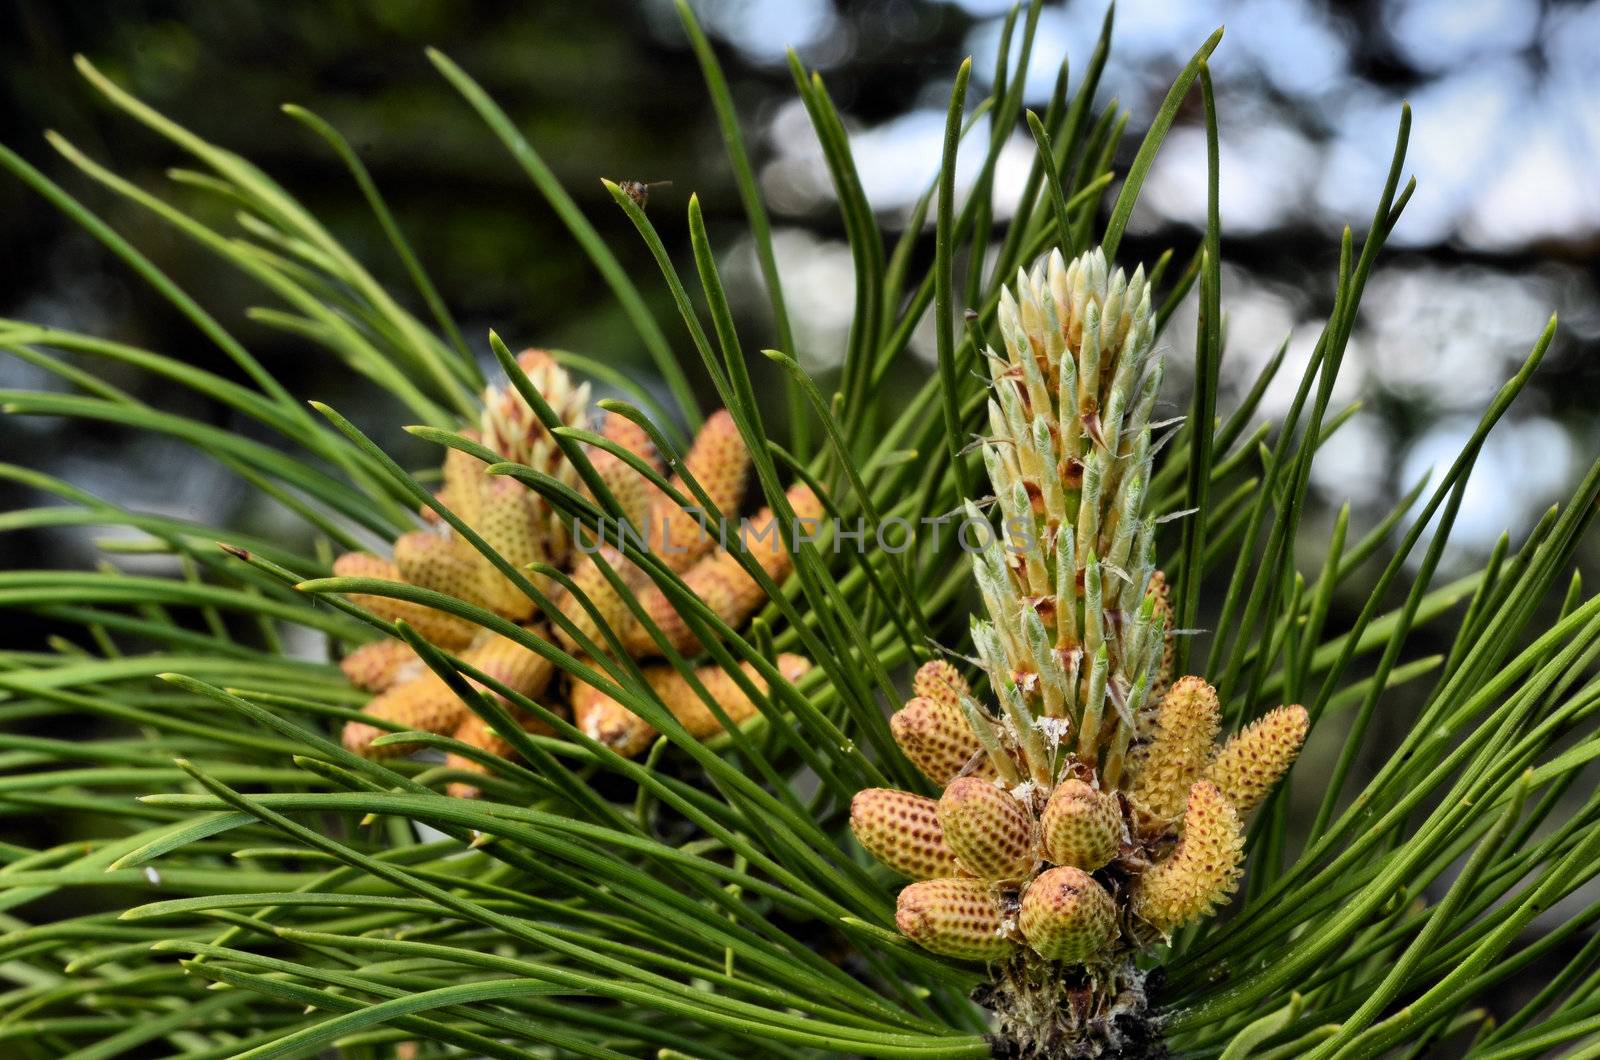 This photo present flowering black pine.